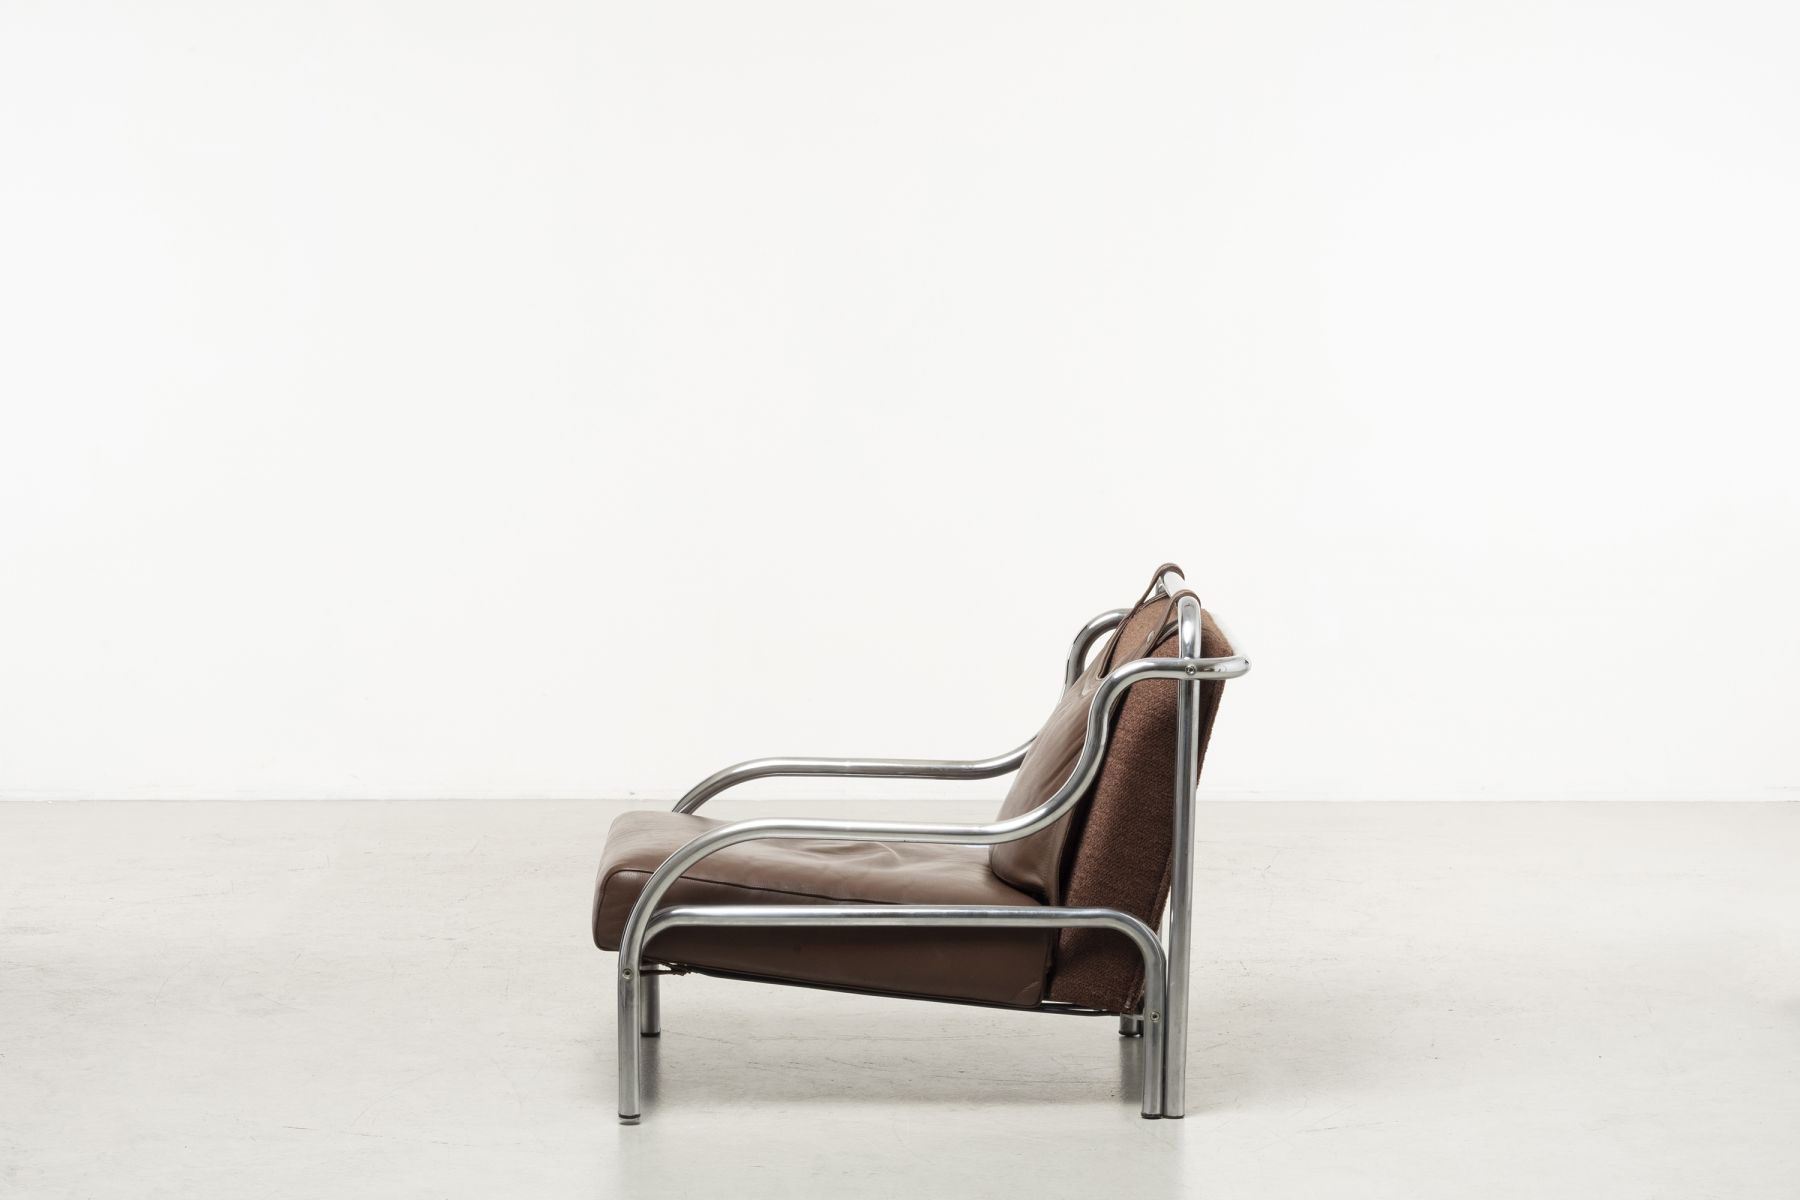 Two Stringa armchairs Gae Aulenti pic-4